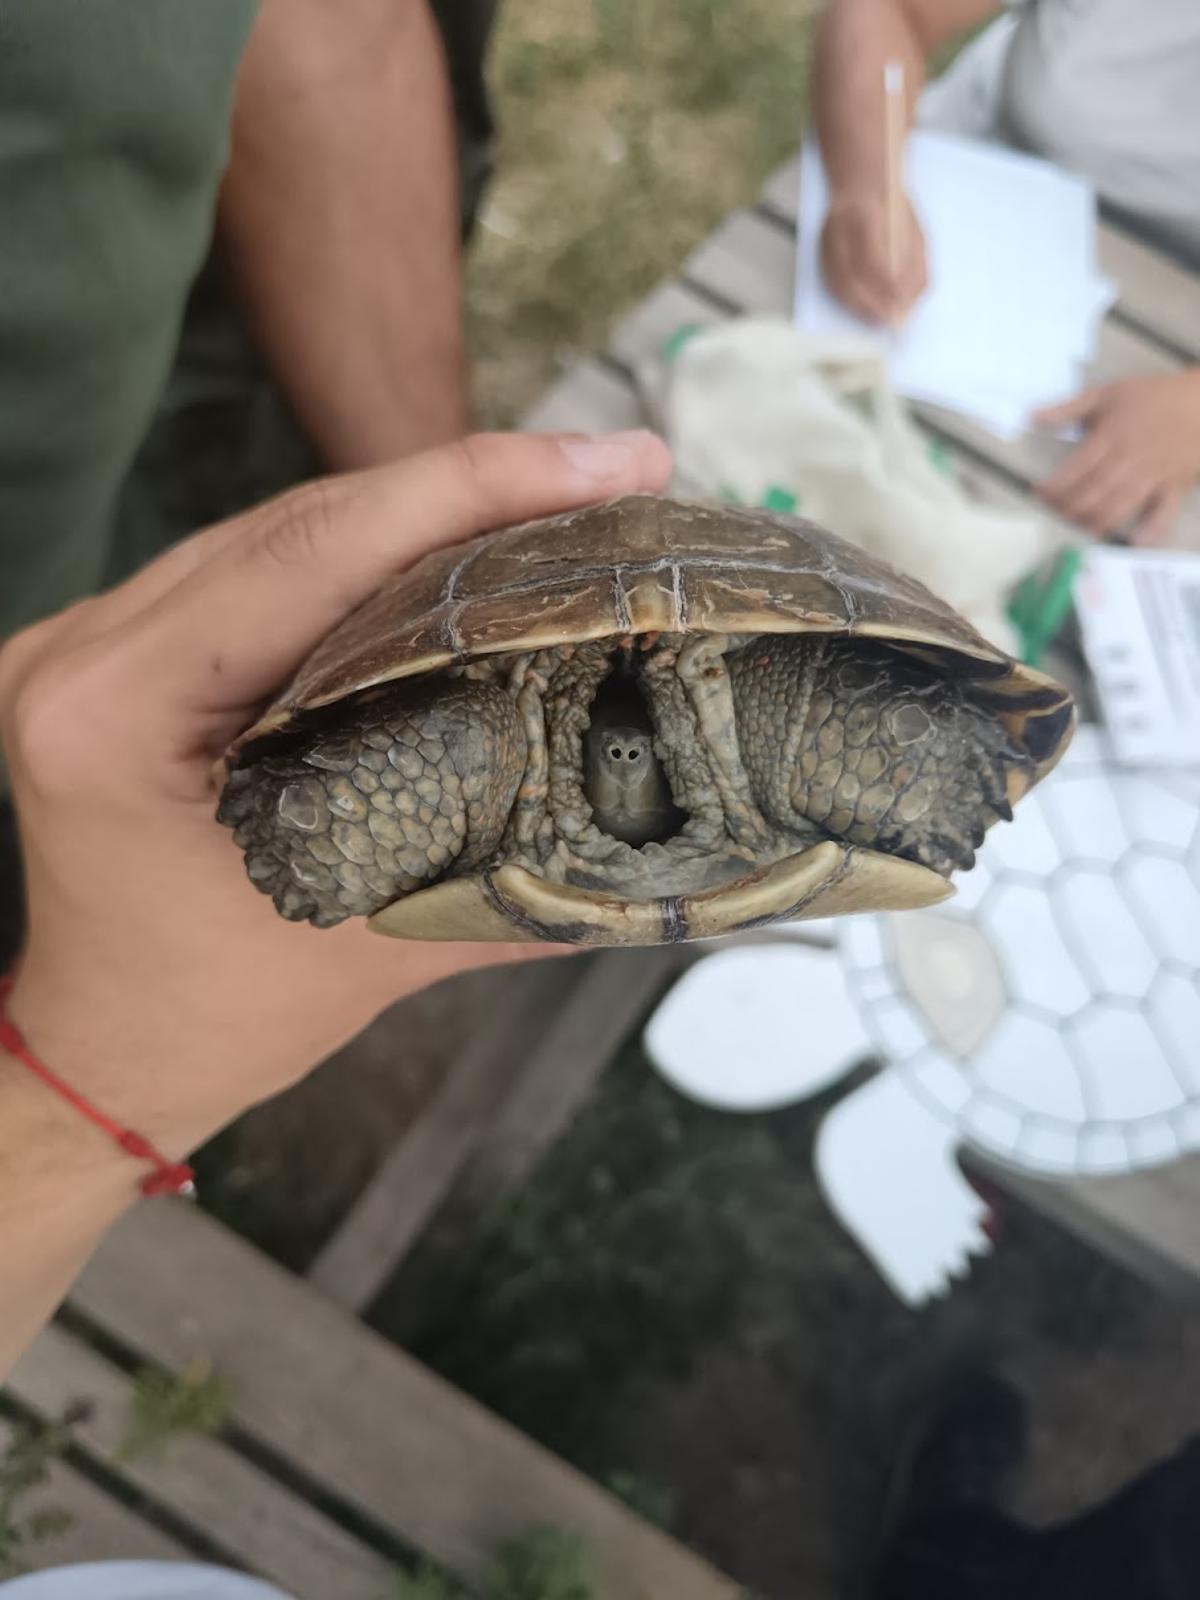 La tortuga autóctona encontrada en el Barranc de Barxeta